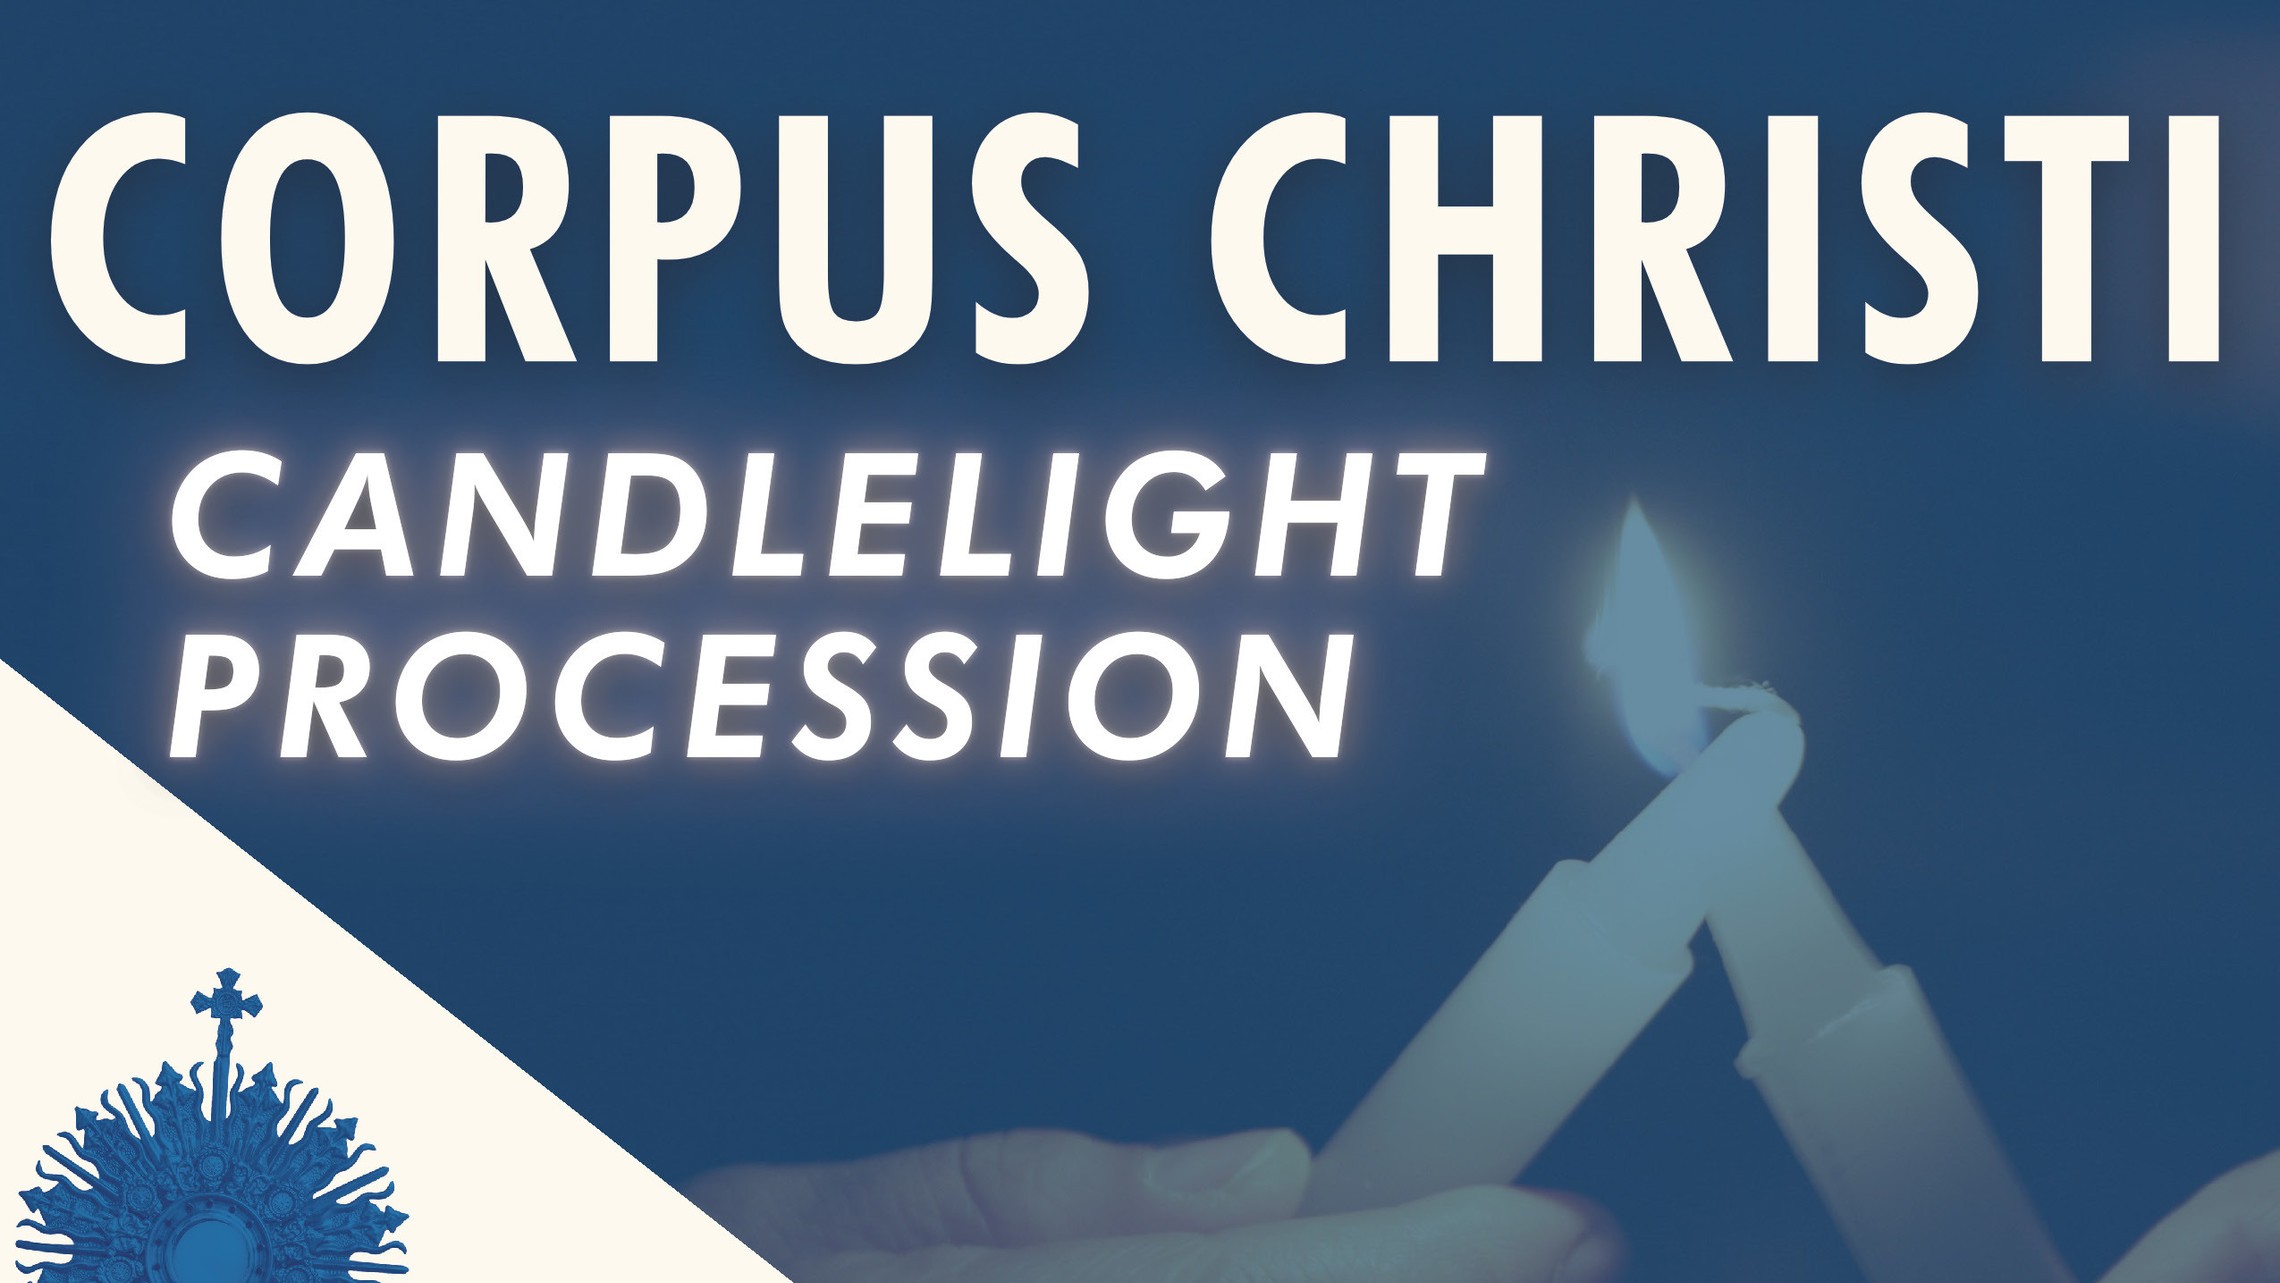 Corpus Christi Candlelight Procession   Er Flyer